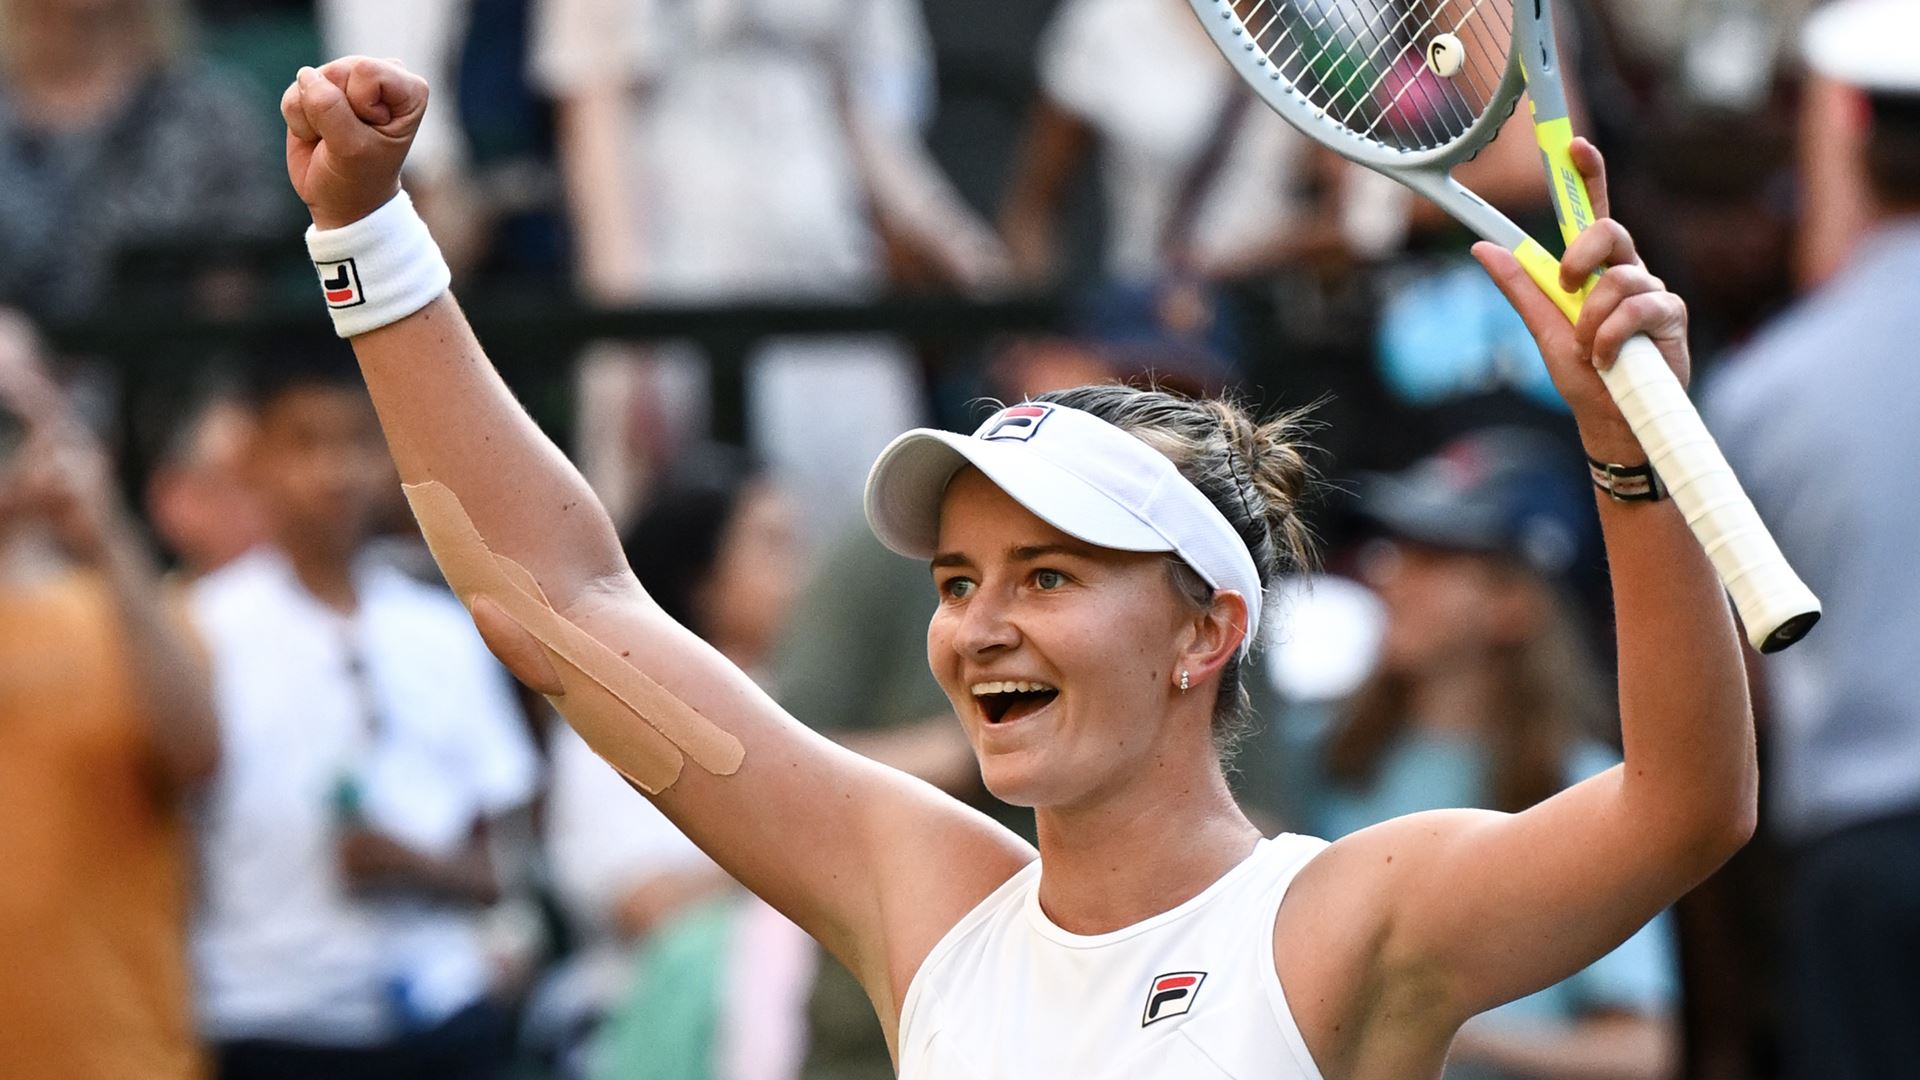 FILA's Barbora Krejcikova Wins Grand Slam Doubles title in London